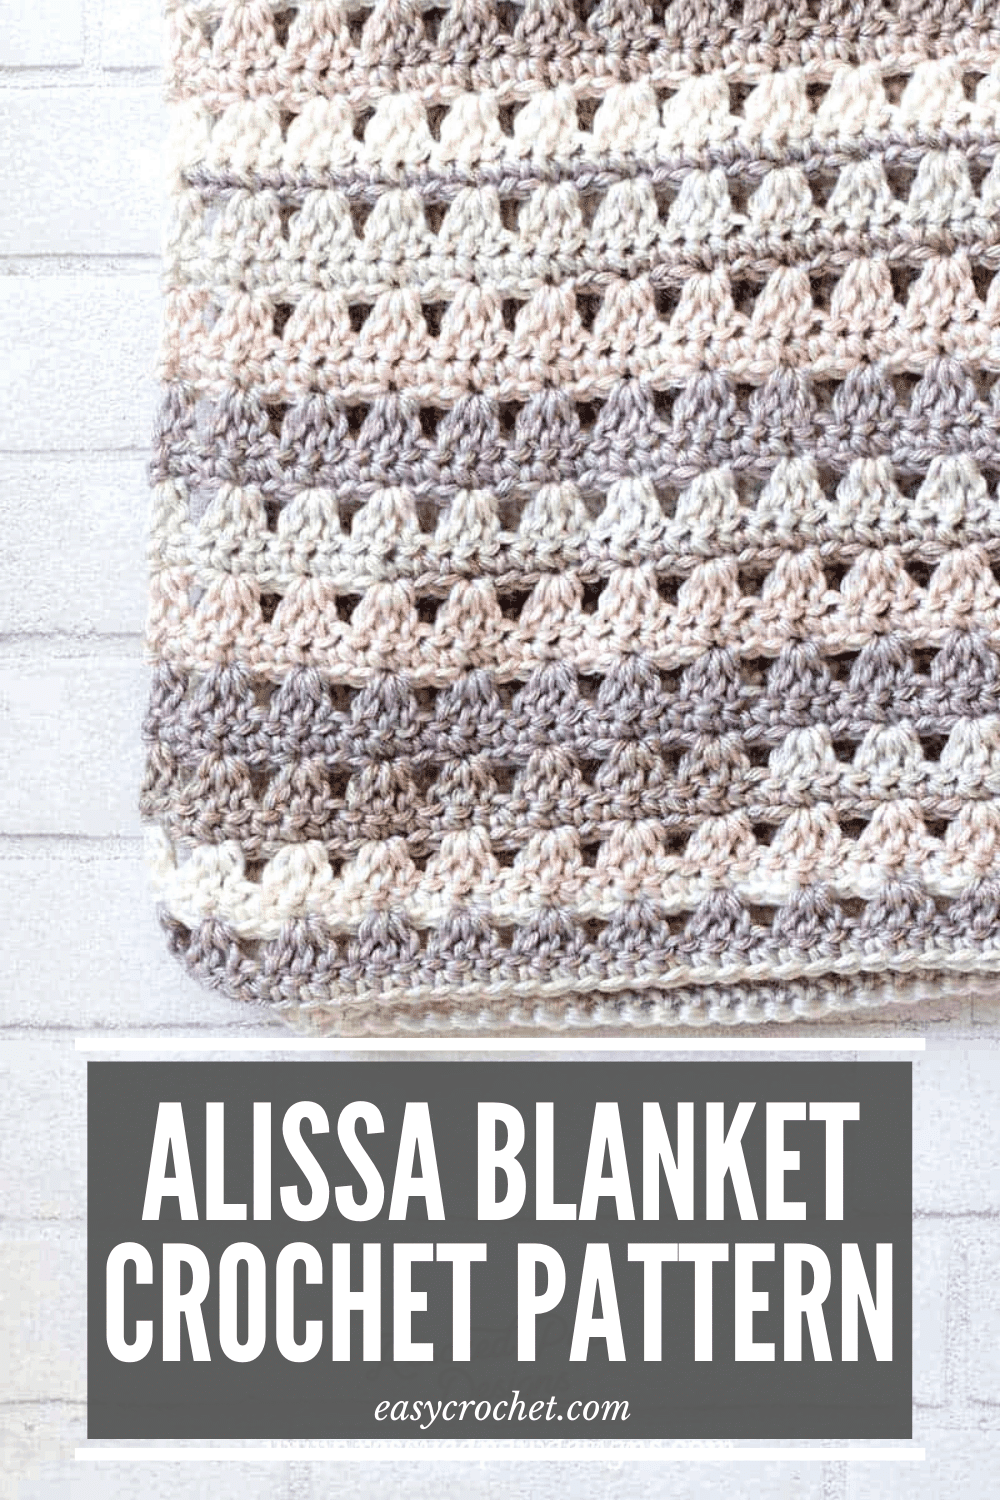 Free Crochet Blanket Pattern - Easy to make crochet blanket pattern using simple stitches. via @easycrochetcom